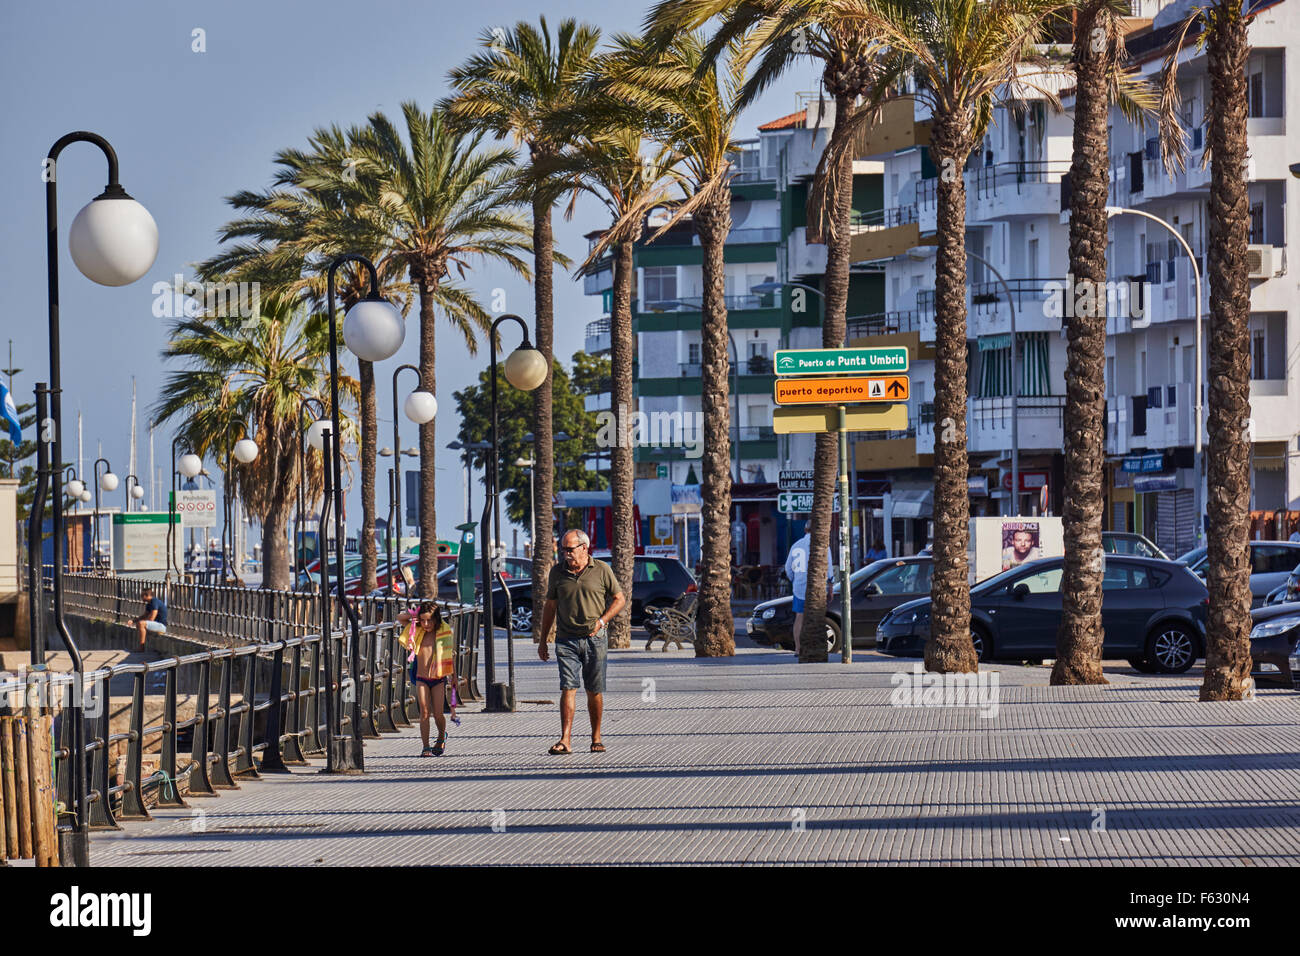 Huelva punta umbria beach fotografías e imágenes de alta resolución - Alamy